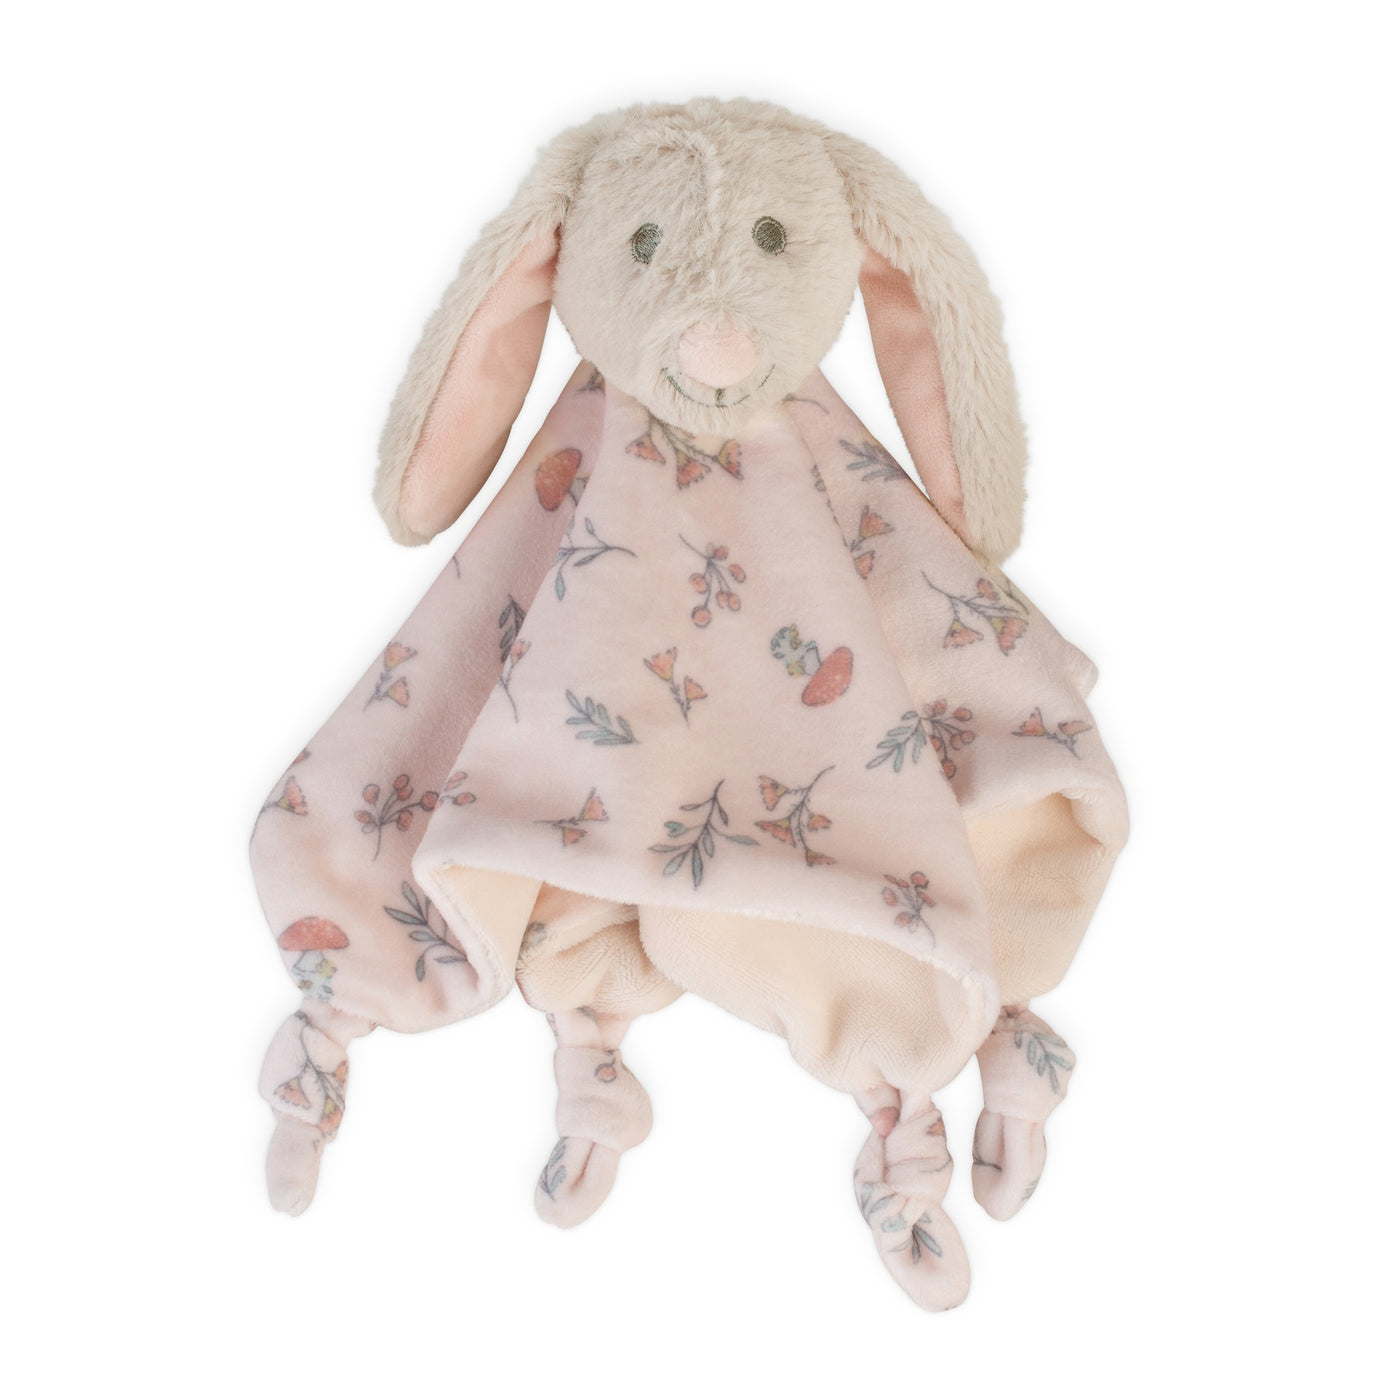 Lovie/Comforter - Harvest Bunny